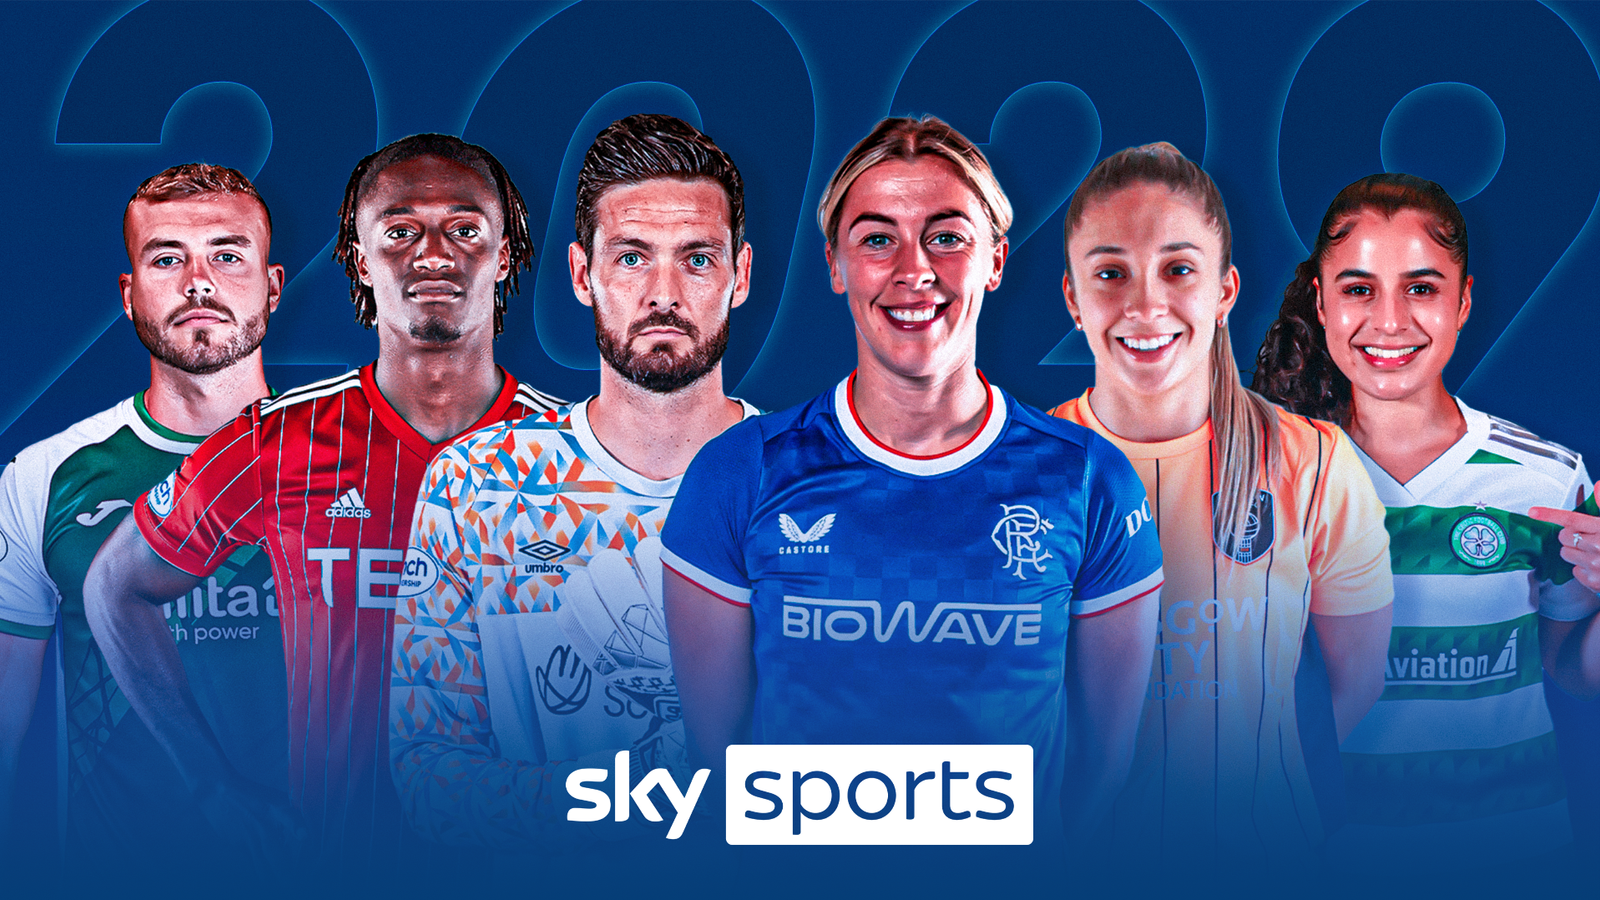 Sky Sports will broadcast the Scottish Premiership and Scottish Women's Premier League